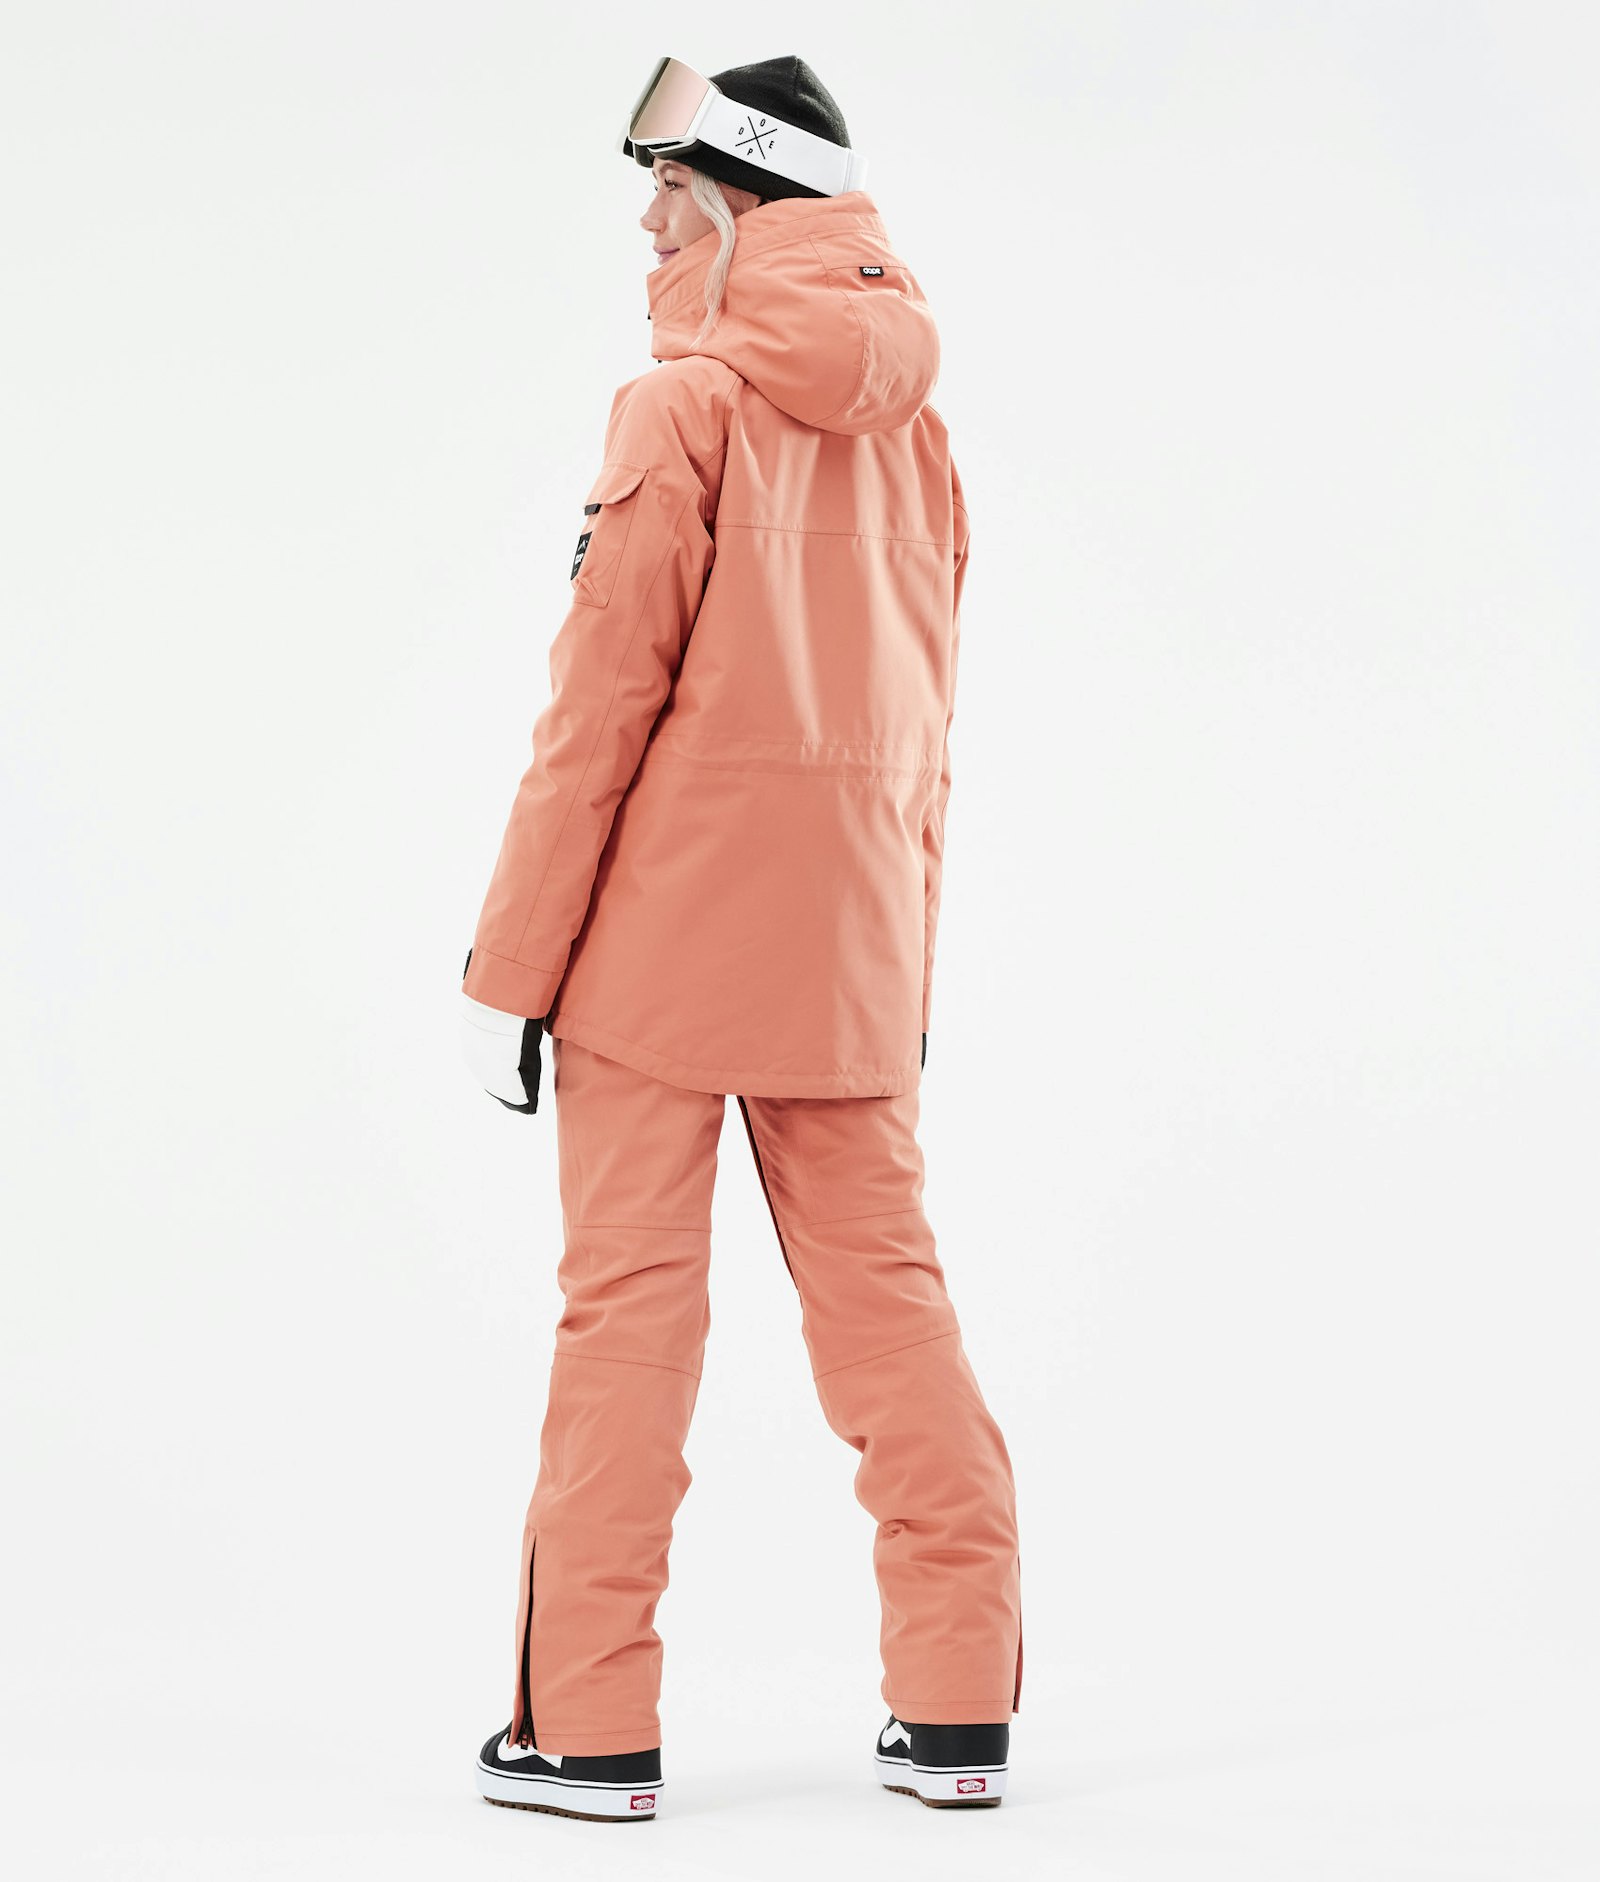 Akin W 2021 Veste Snowboard Femme Peach Renewed, Image 6 sur 11